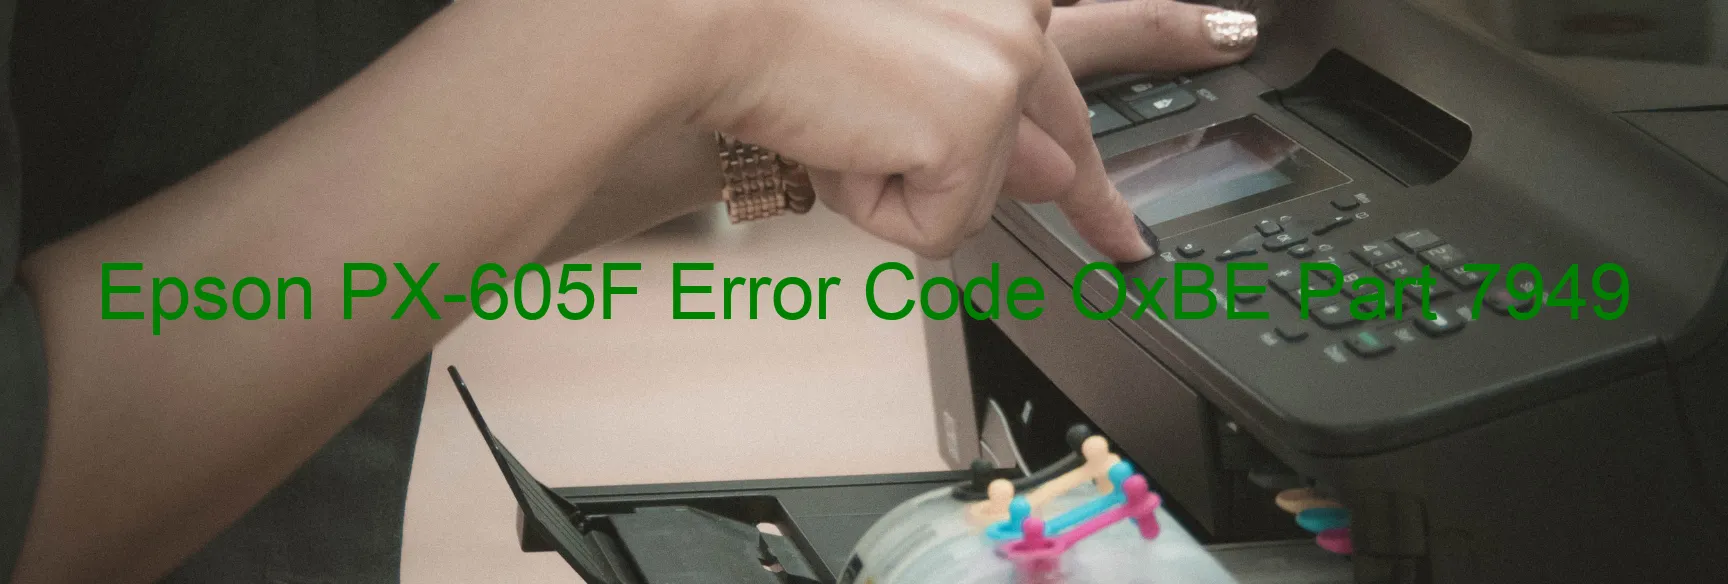 Epson PX-605F Error Code OxBE Part 7949